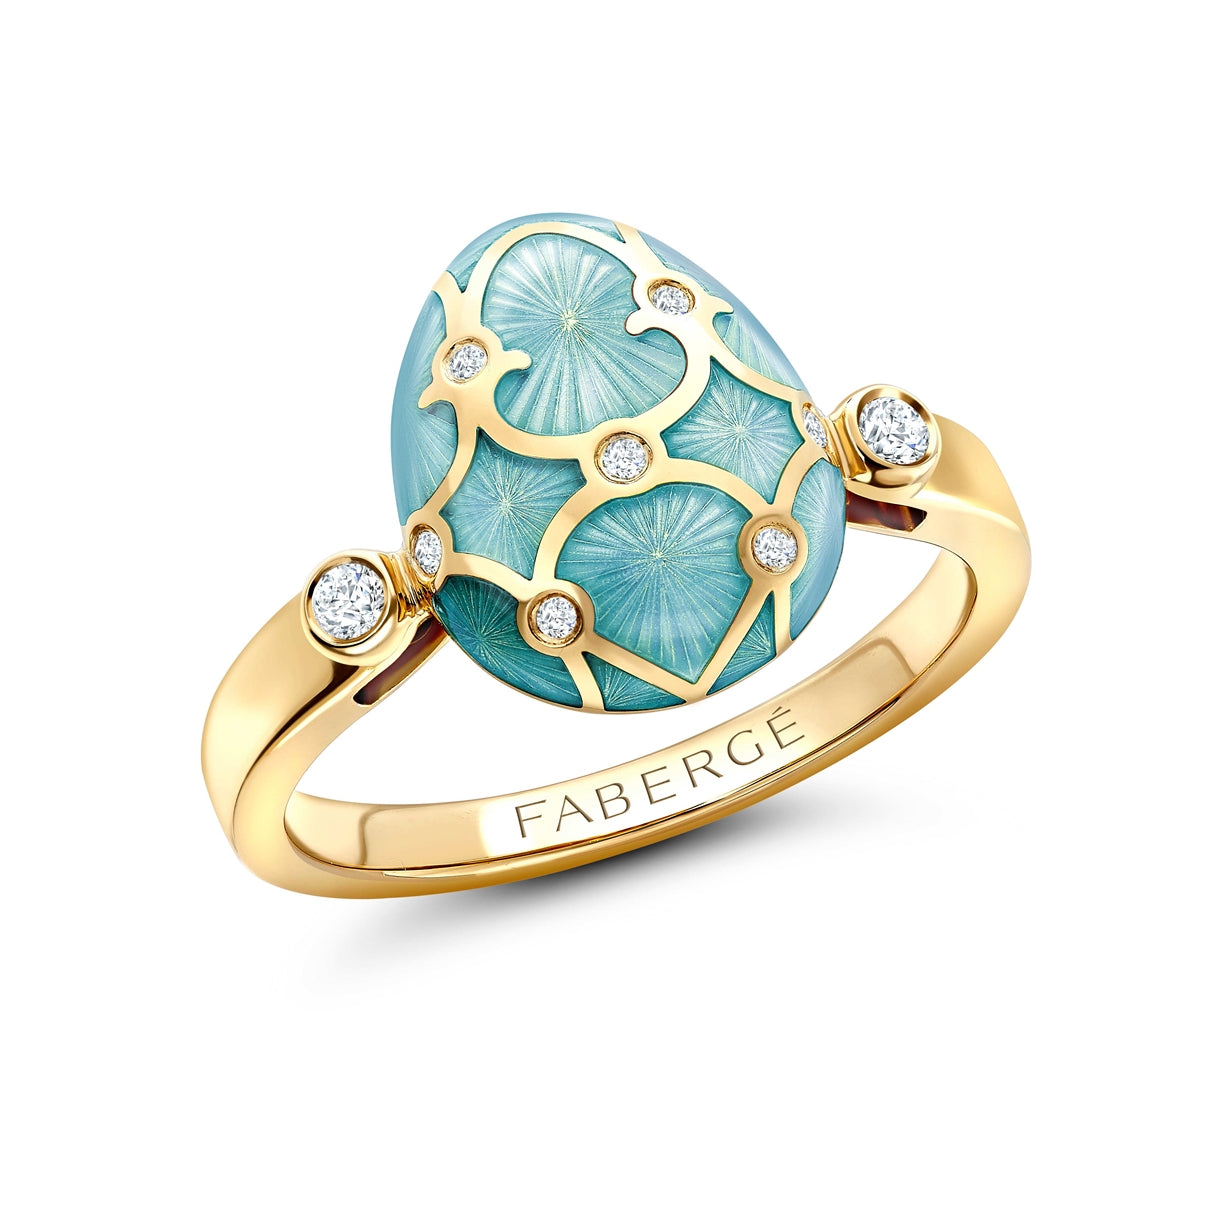 Heritage-Yellow-Gold-Diamond-&-Turquoise-Guilloché-Enamel-Egg-Ring